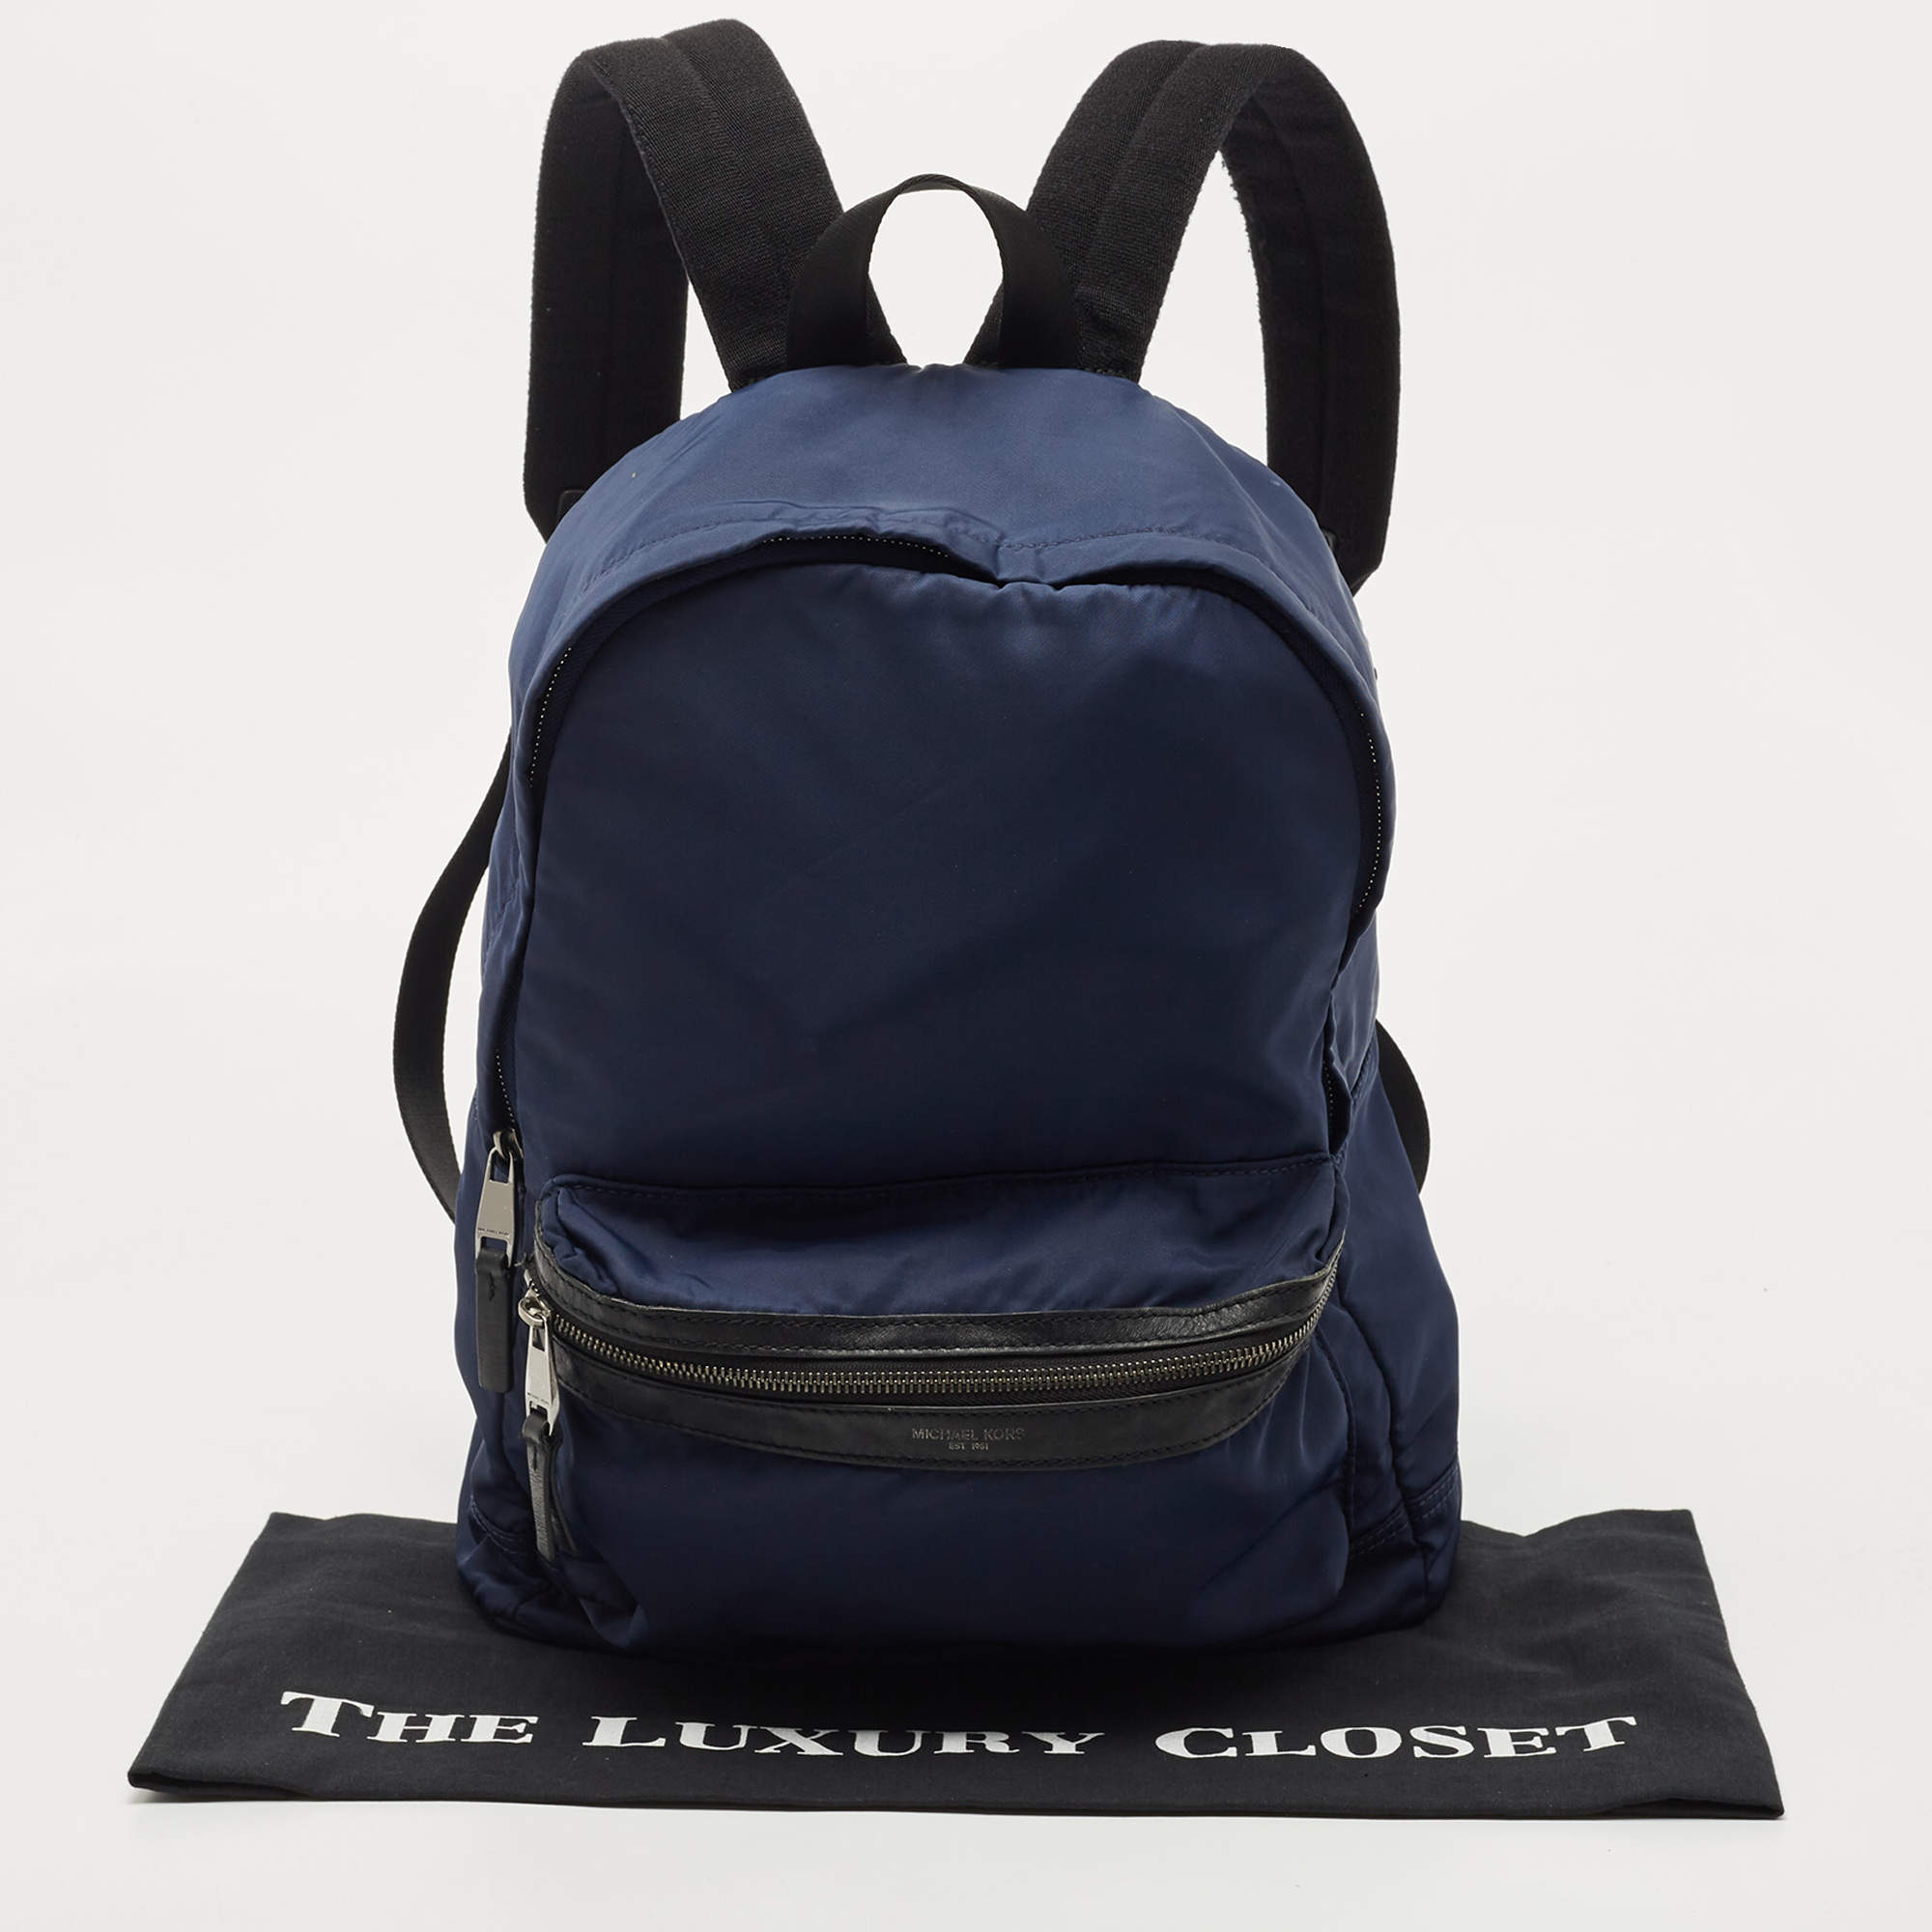 Michael Kors Navy Blue/Black Nylon and Leather Kent Backpack